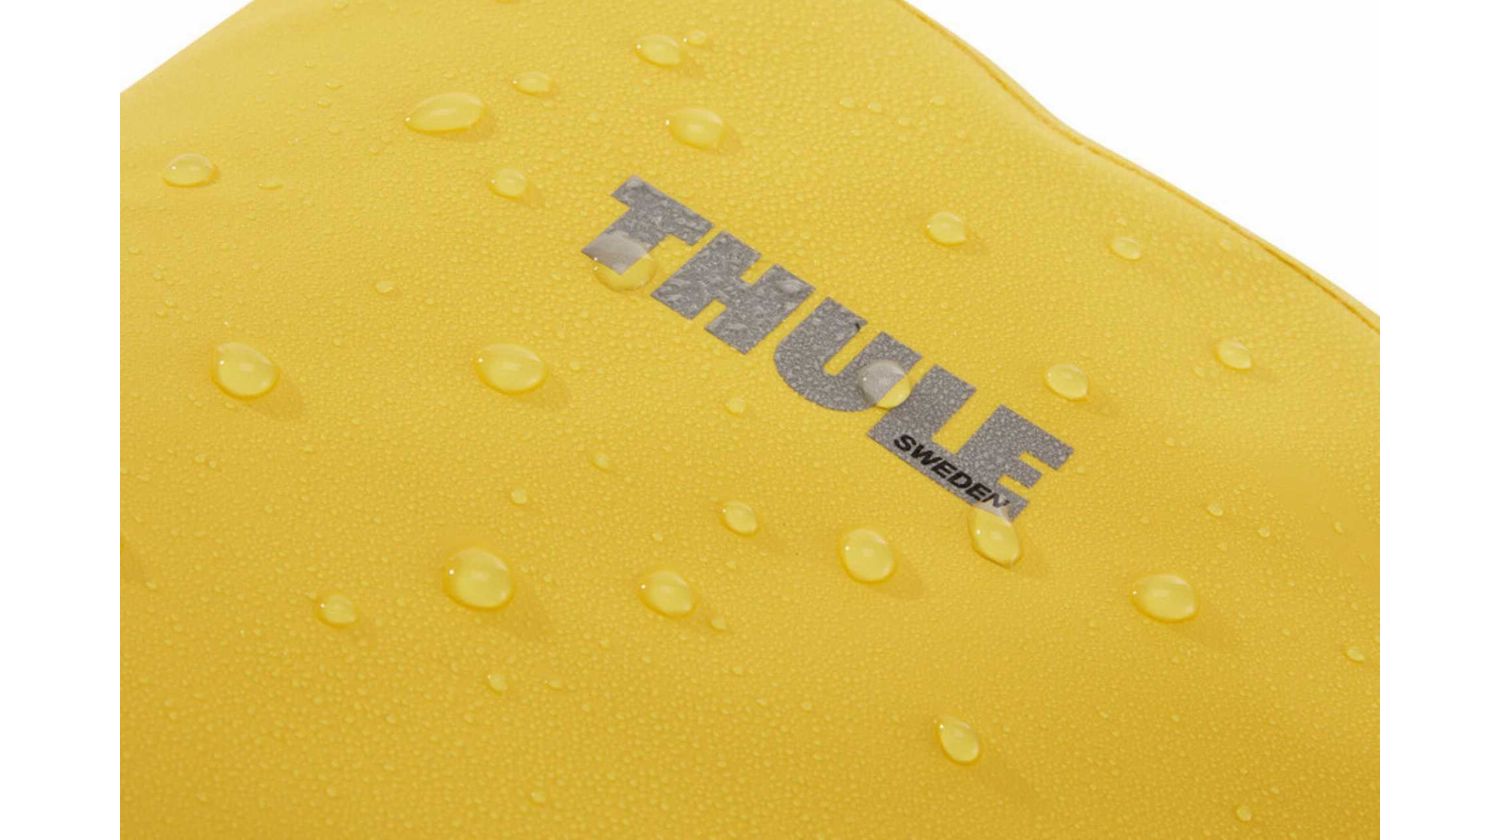 Thule Shield Pannier 25L Pair Gepäckträgertaschen gelb